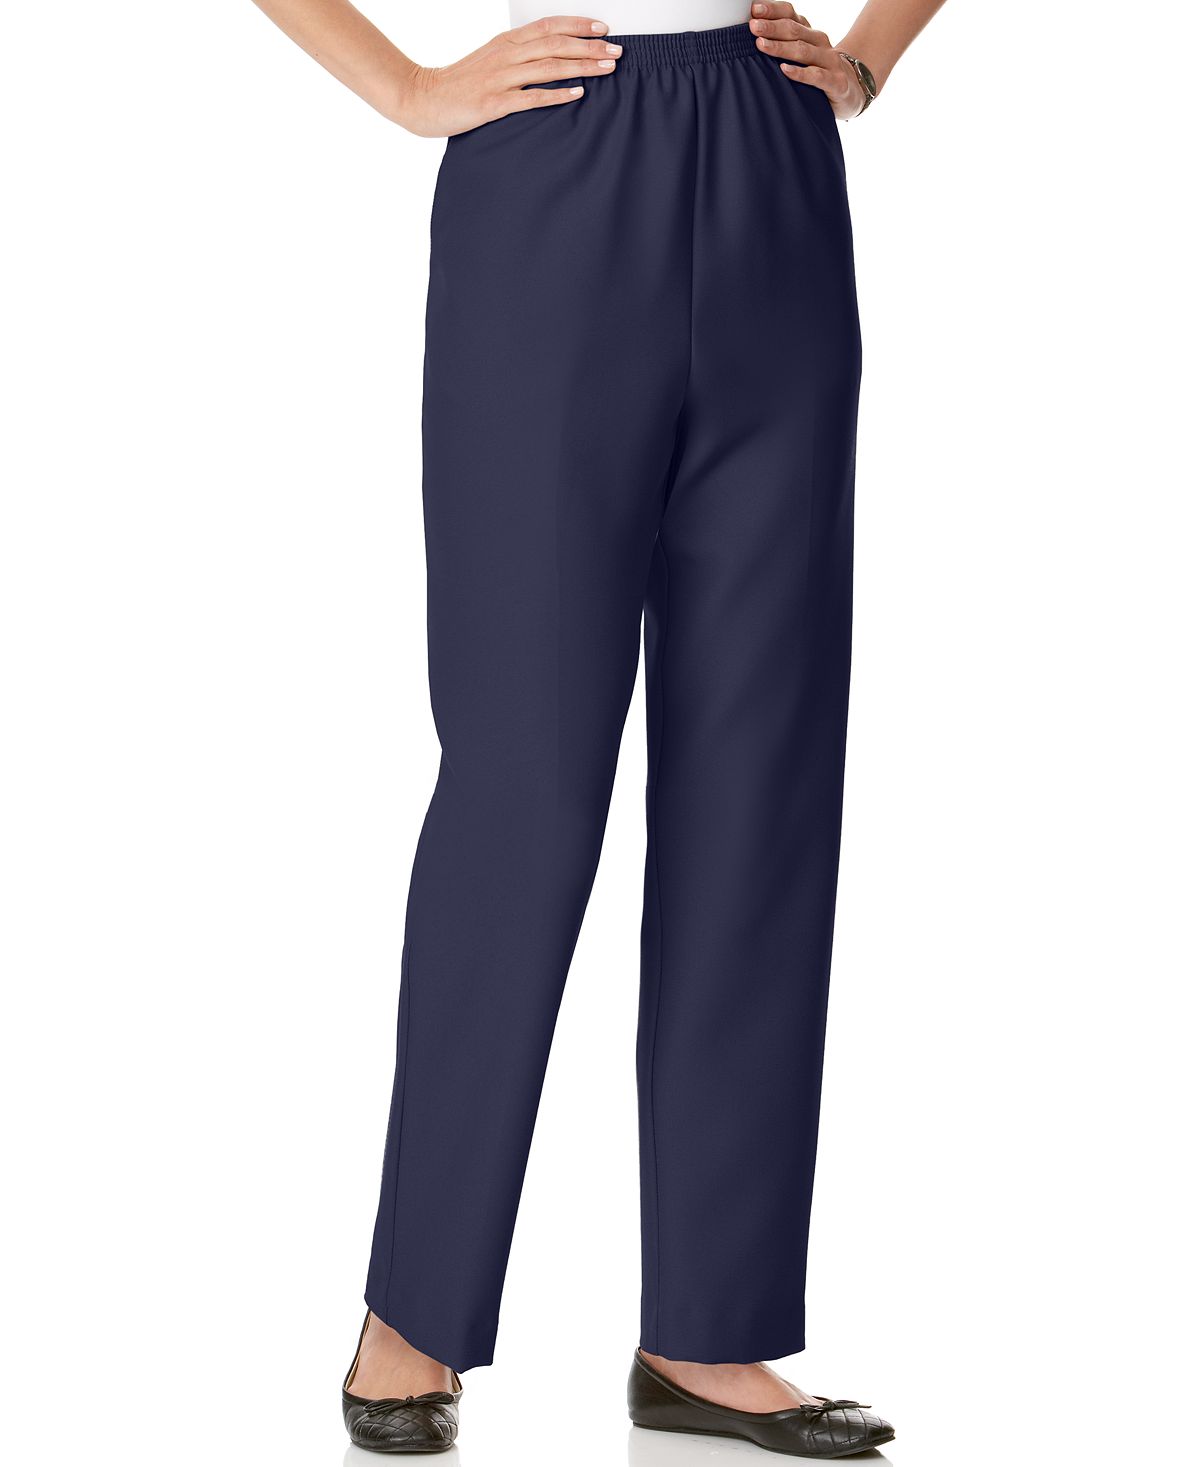 кроссовки kinetix alfred 2fx navy Классические прямые брюки без застежки в цвете Petite и Petite Short Alfred Dunner, темно-синий